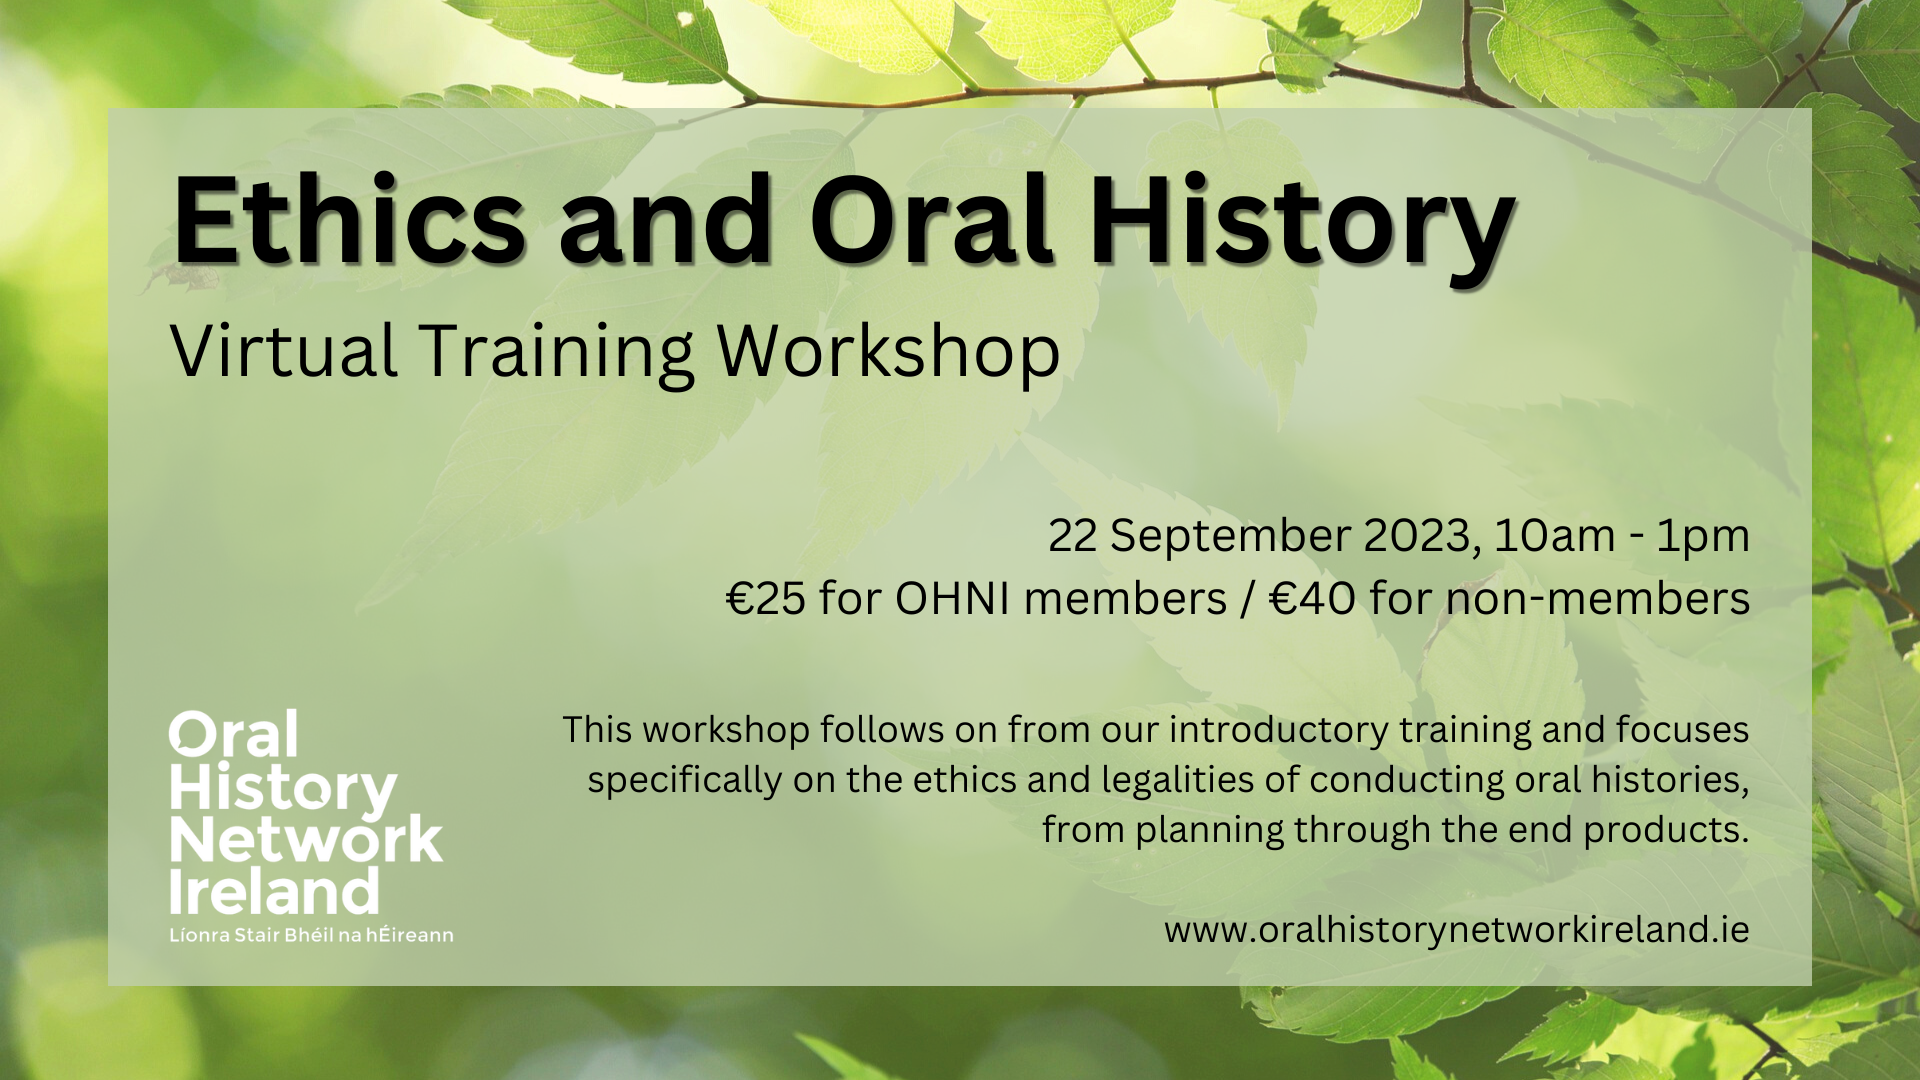 Ethics and Oral History workshop - 22 Sept 2023